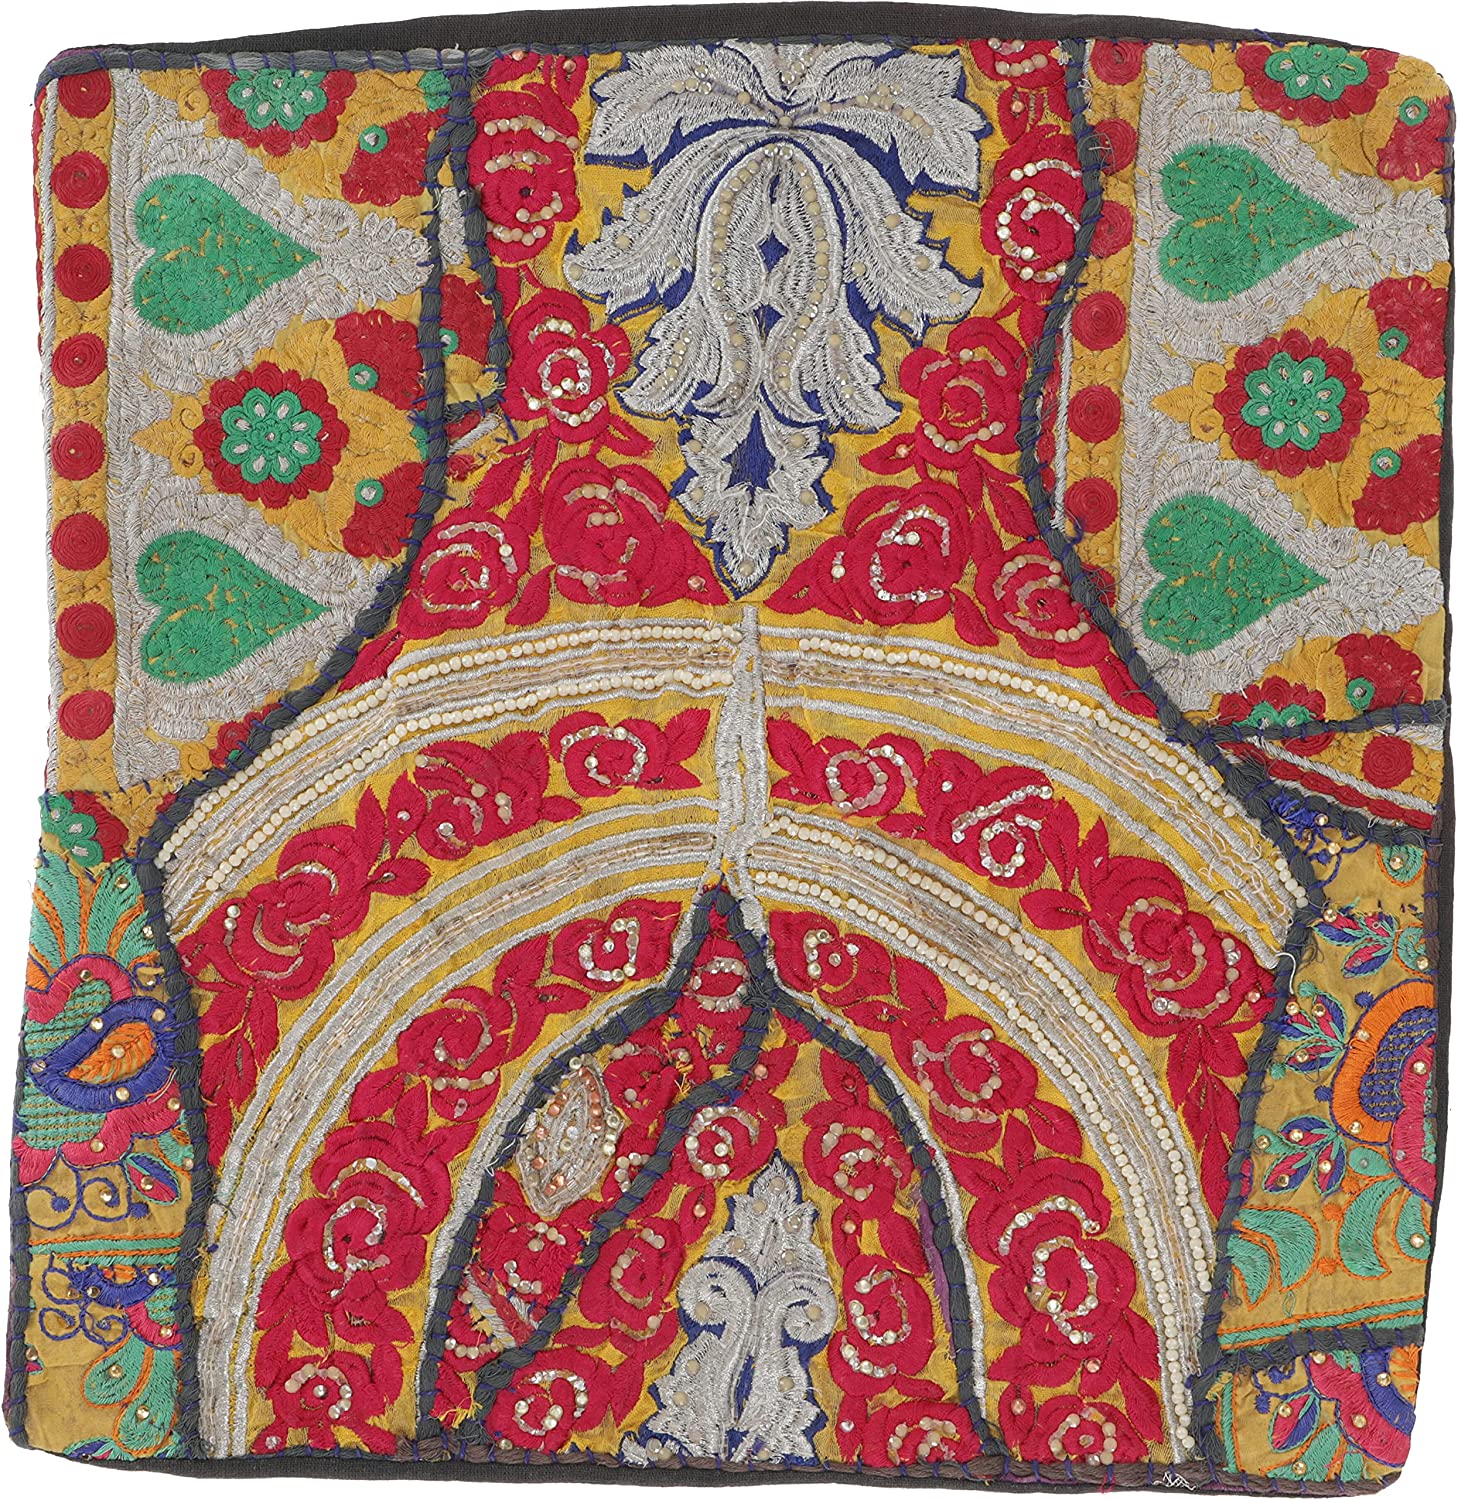 Guru-Shop GURU SHOP Patchwork Cushion Cover, Decorative Cushion Cover Made of Rajasthan, Single Piece, Pattern 3, Red, Cotton, 40 x 40 cm, Decorative Cushion, Sofa Cushion